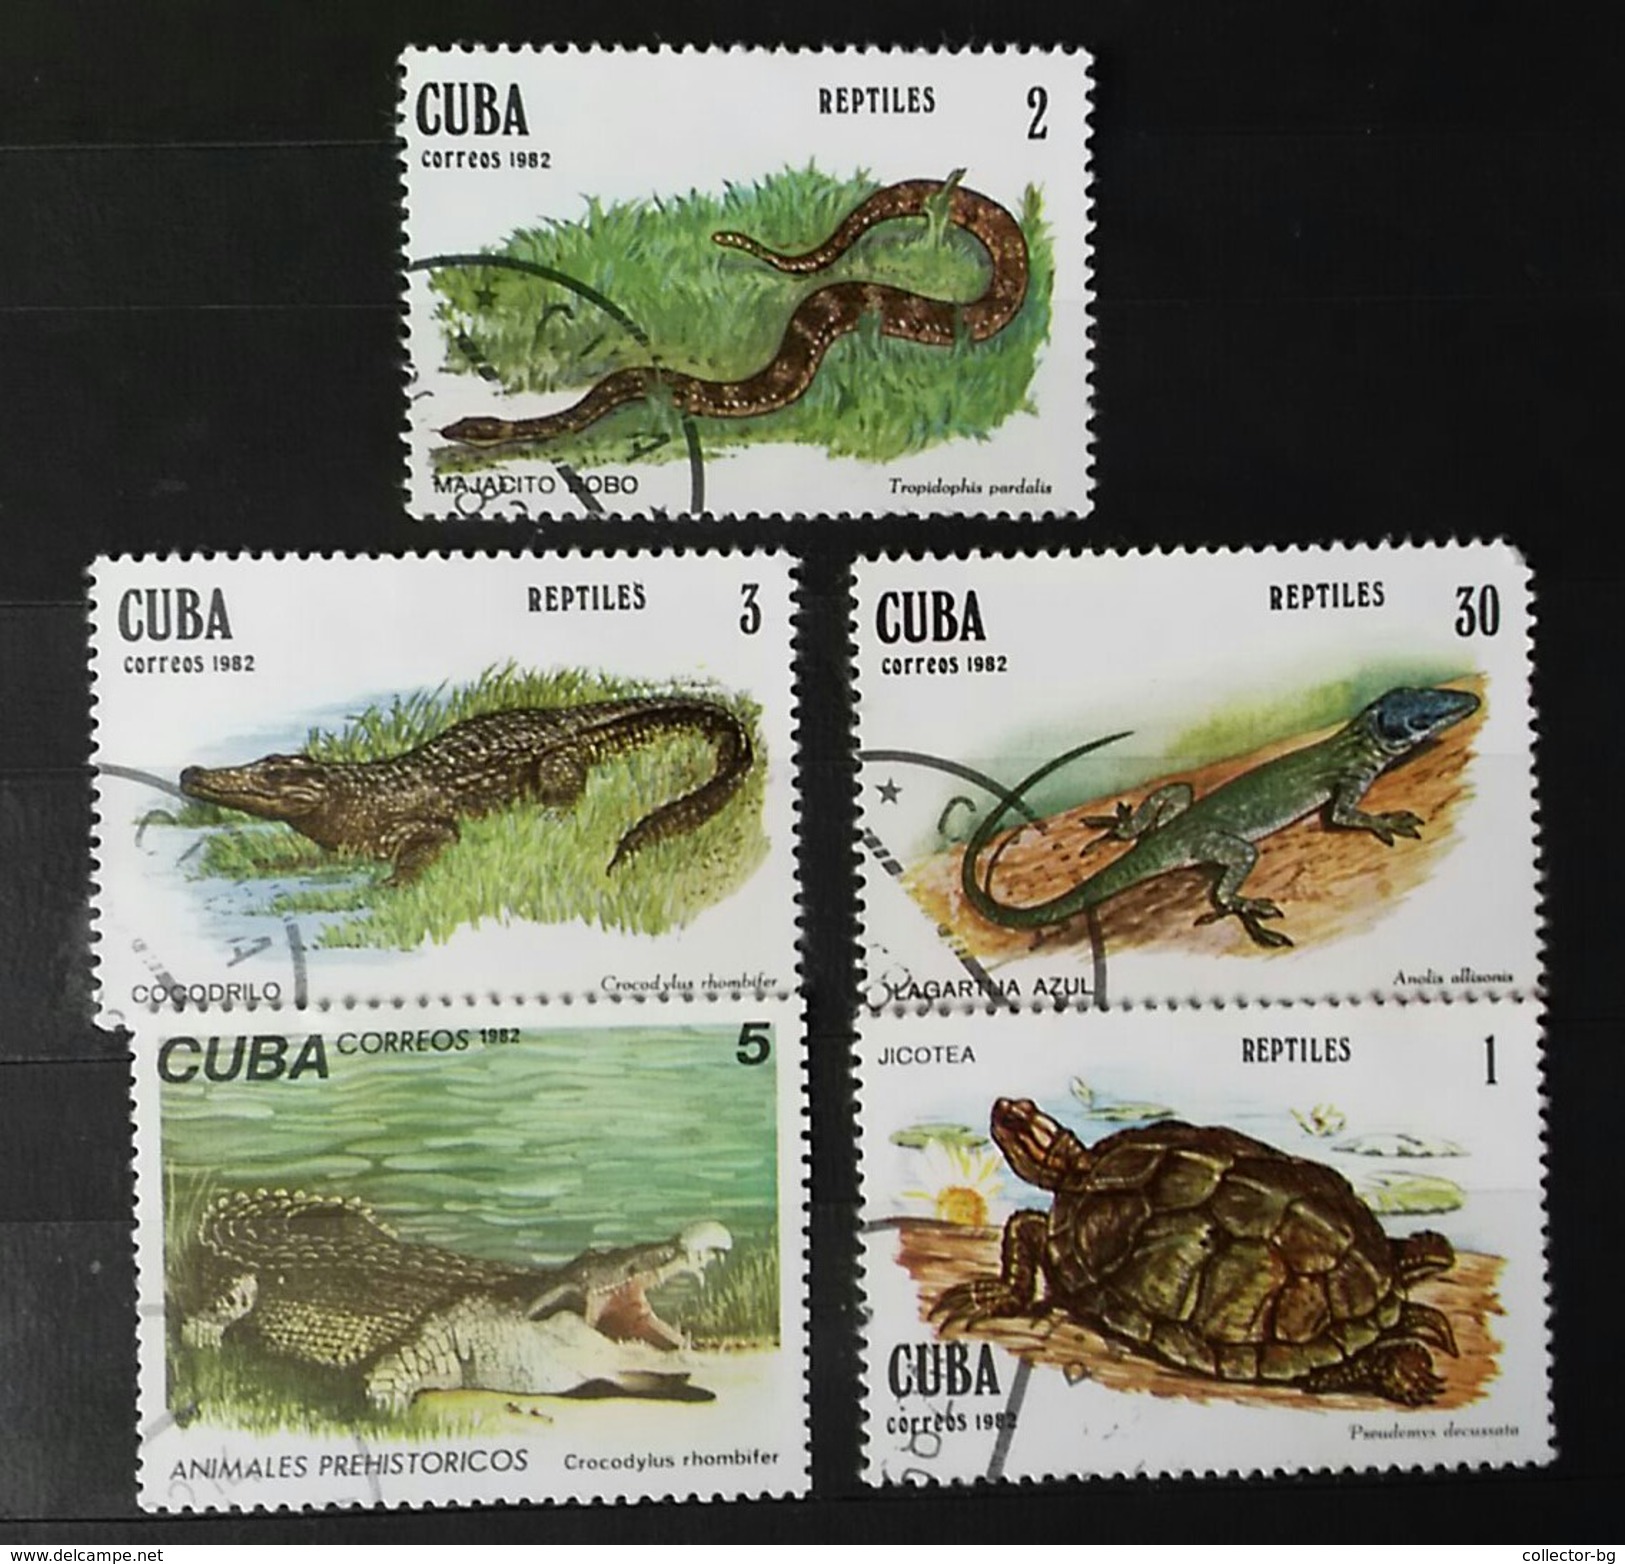 Unused stamps - RARE SET LOT 1982 CUBA 1+2+3+5+30 CORREOS ANIMAL STAMP  TIMBRE